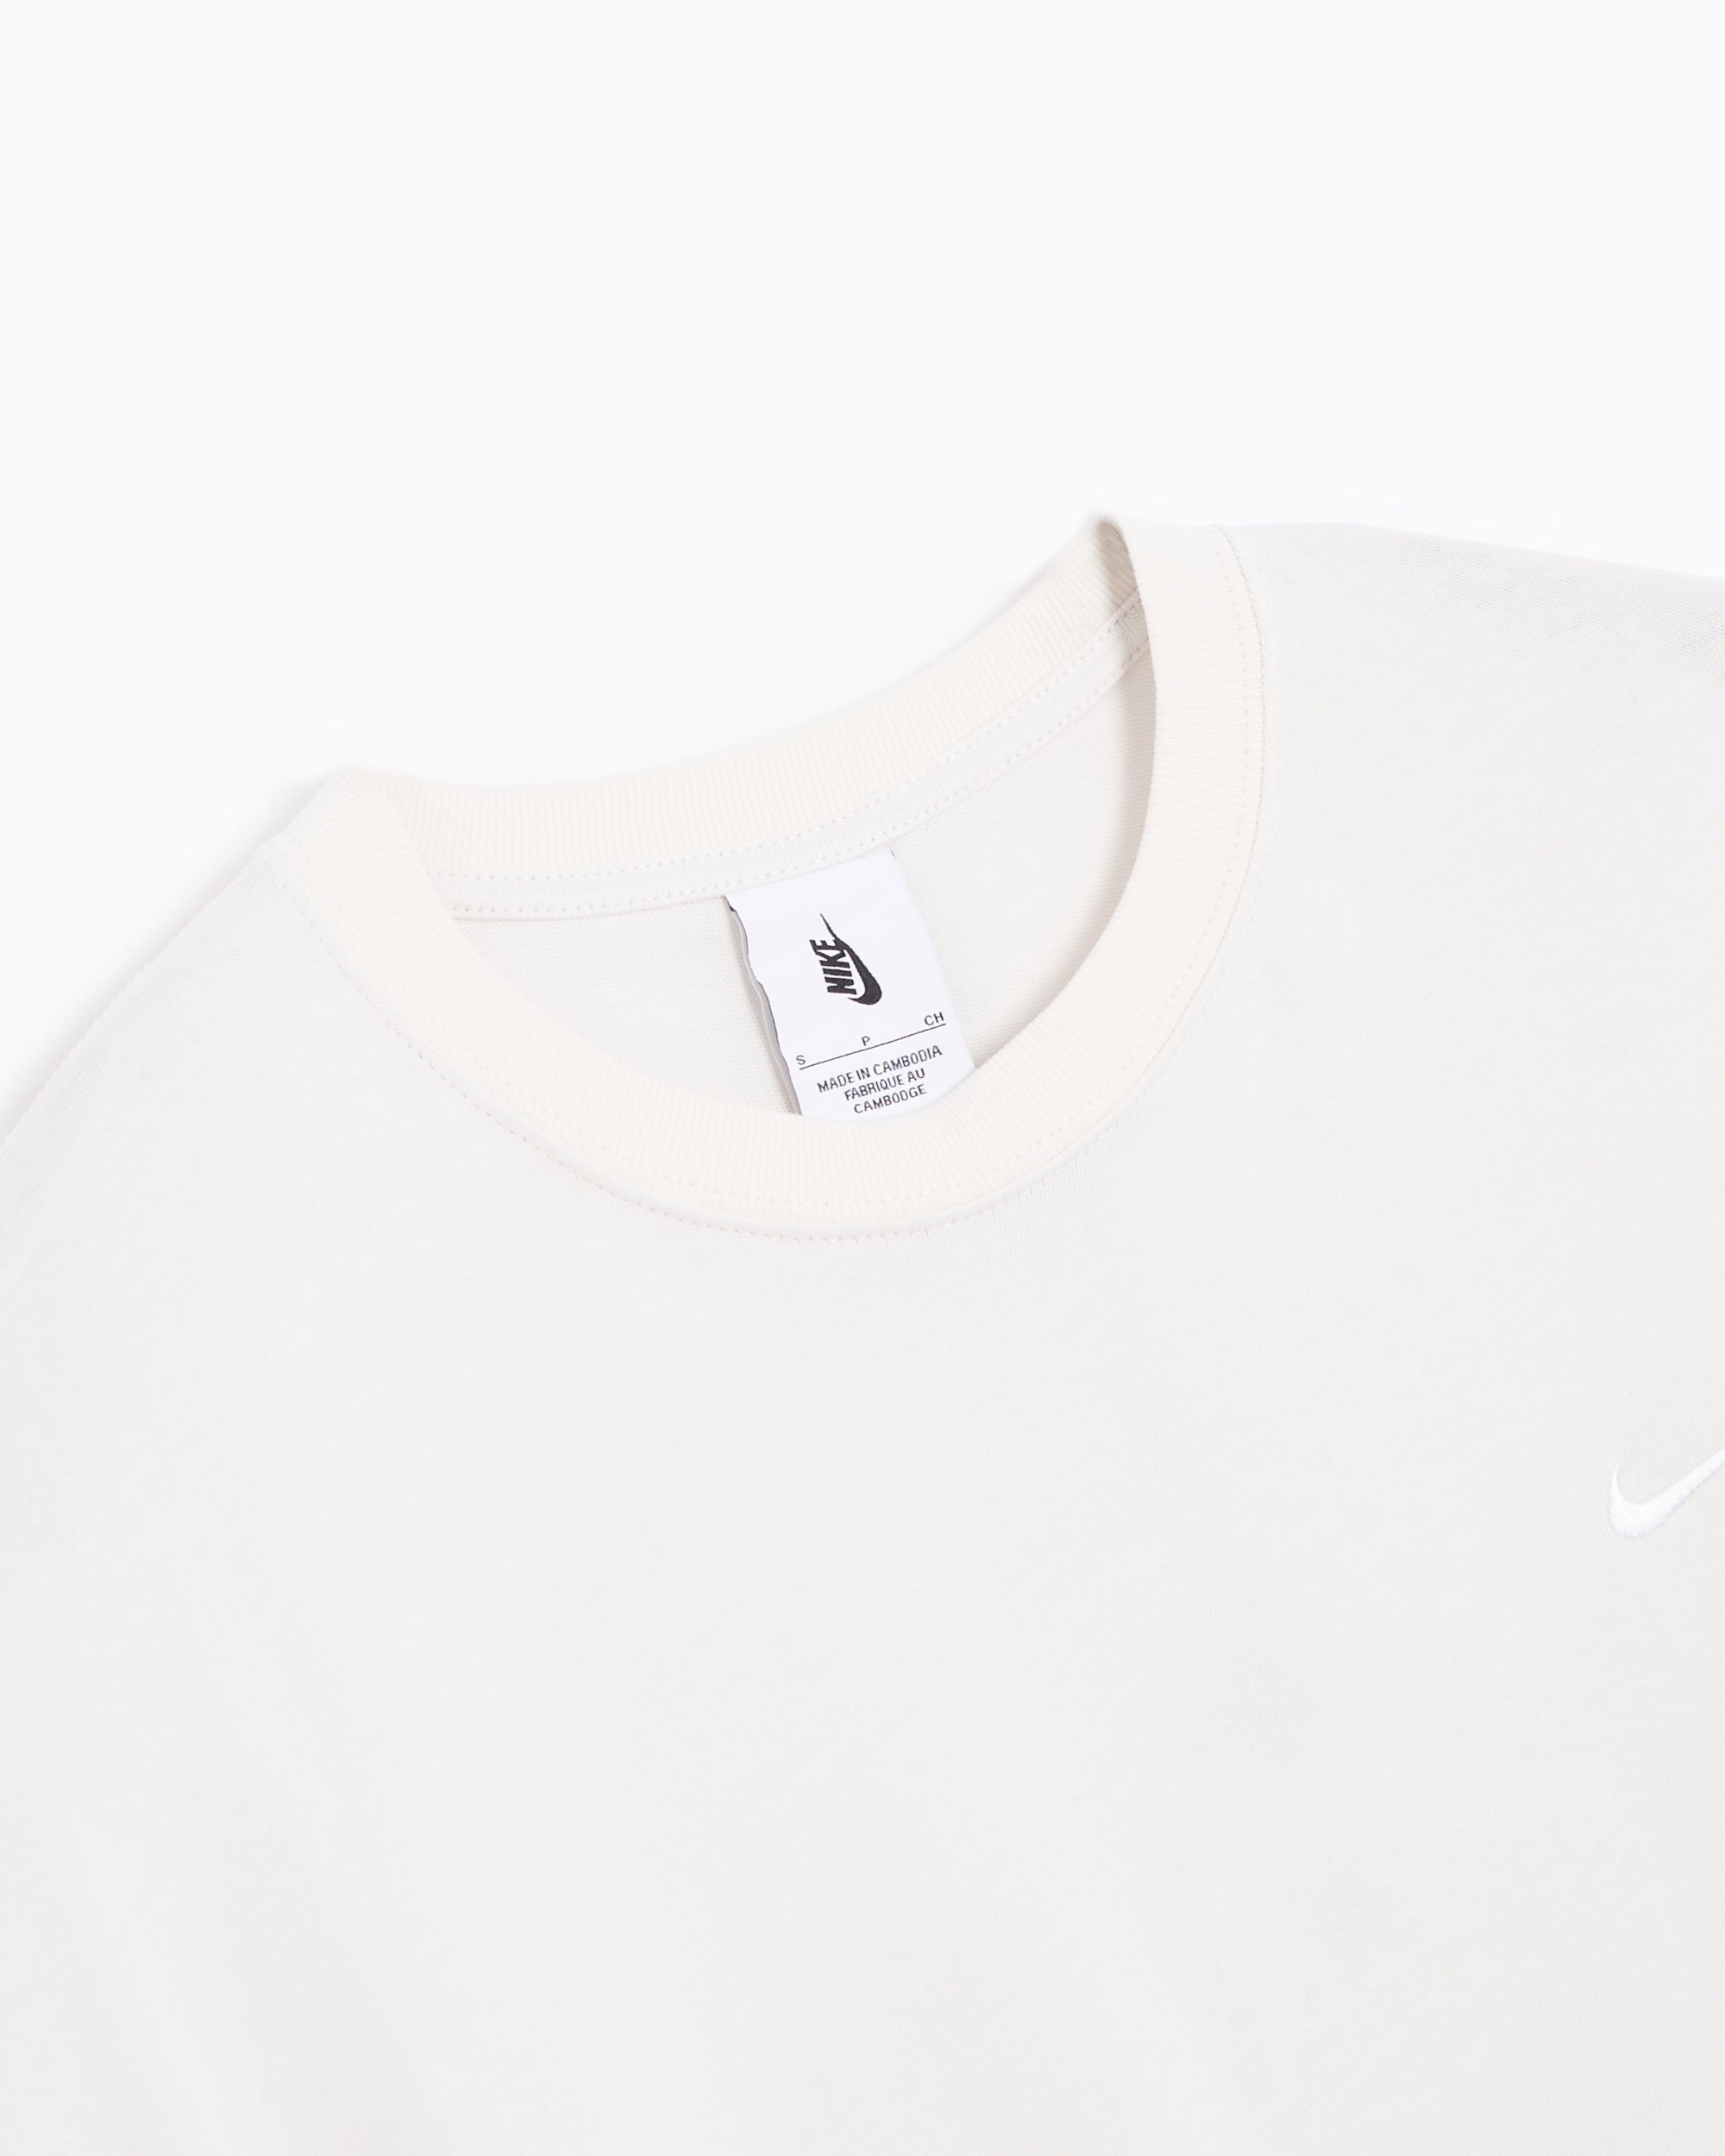 Nike Sportswear Solo Swoosh T-Shirt Grey